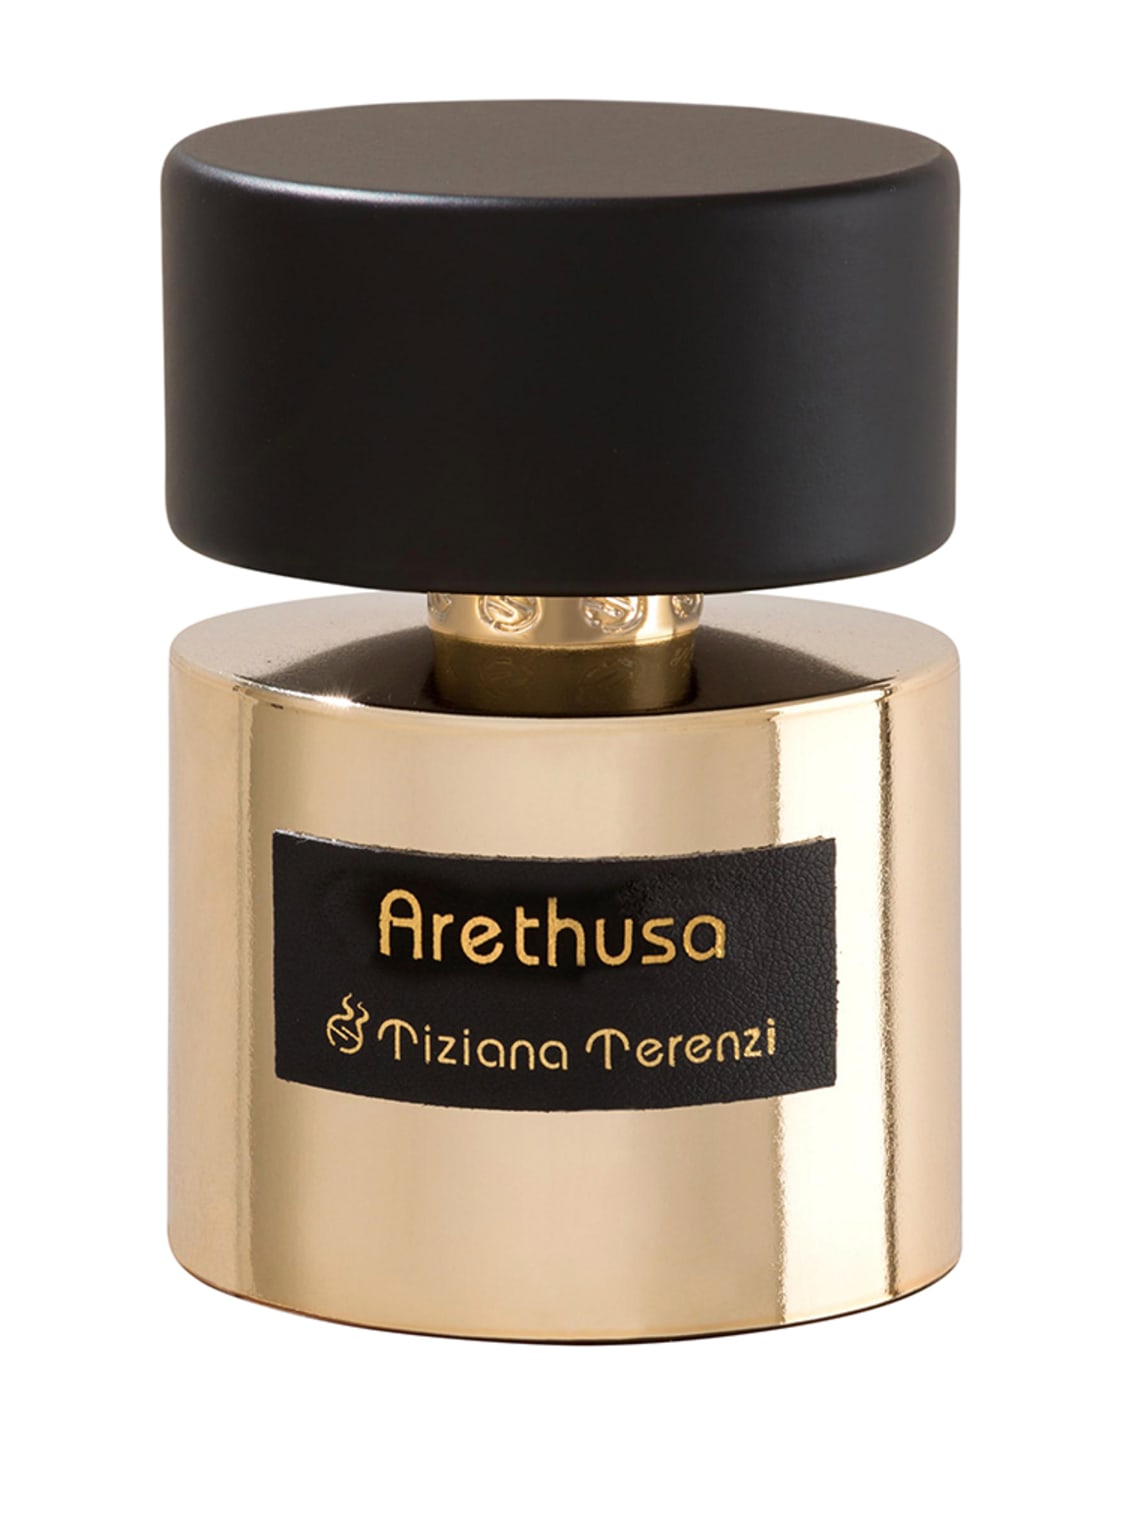 Tiziana Terenzi Arethusa Extrait de Parfum 100 ml von Tiziana Terenzi